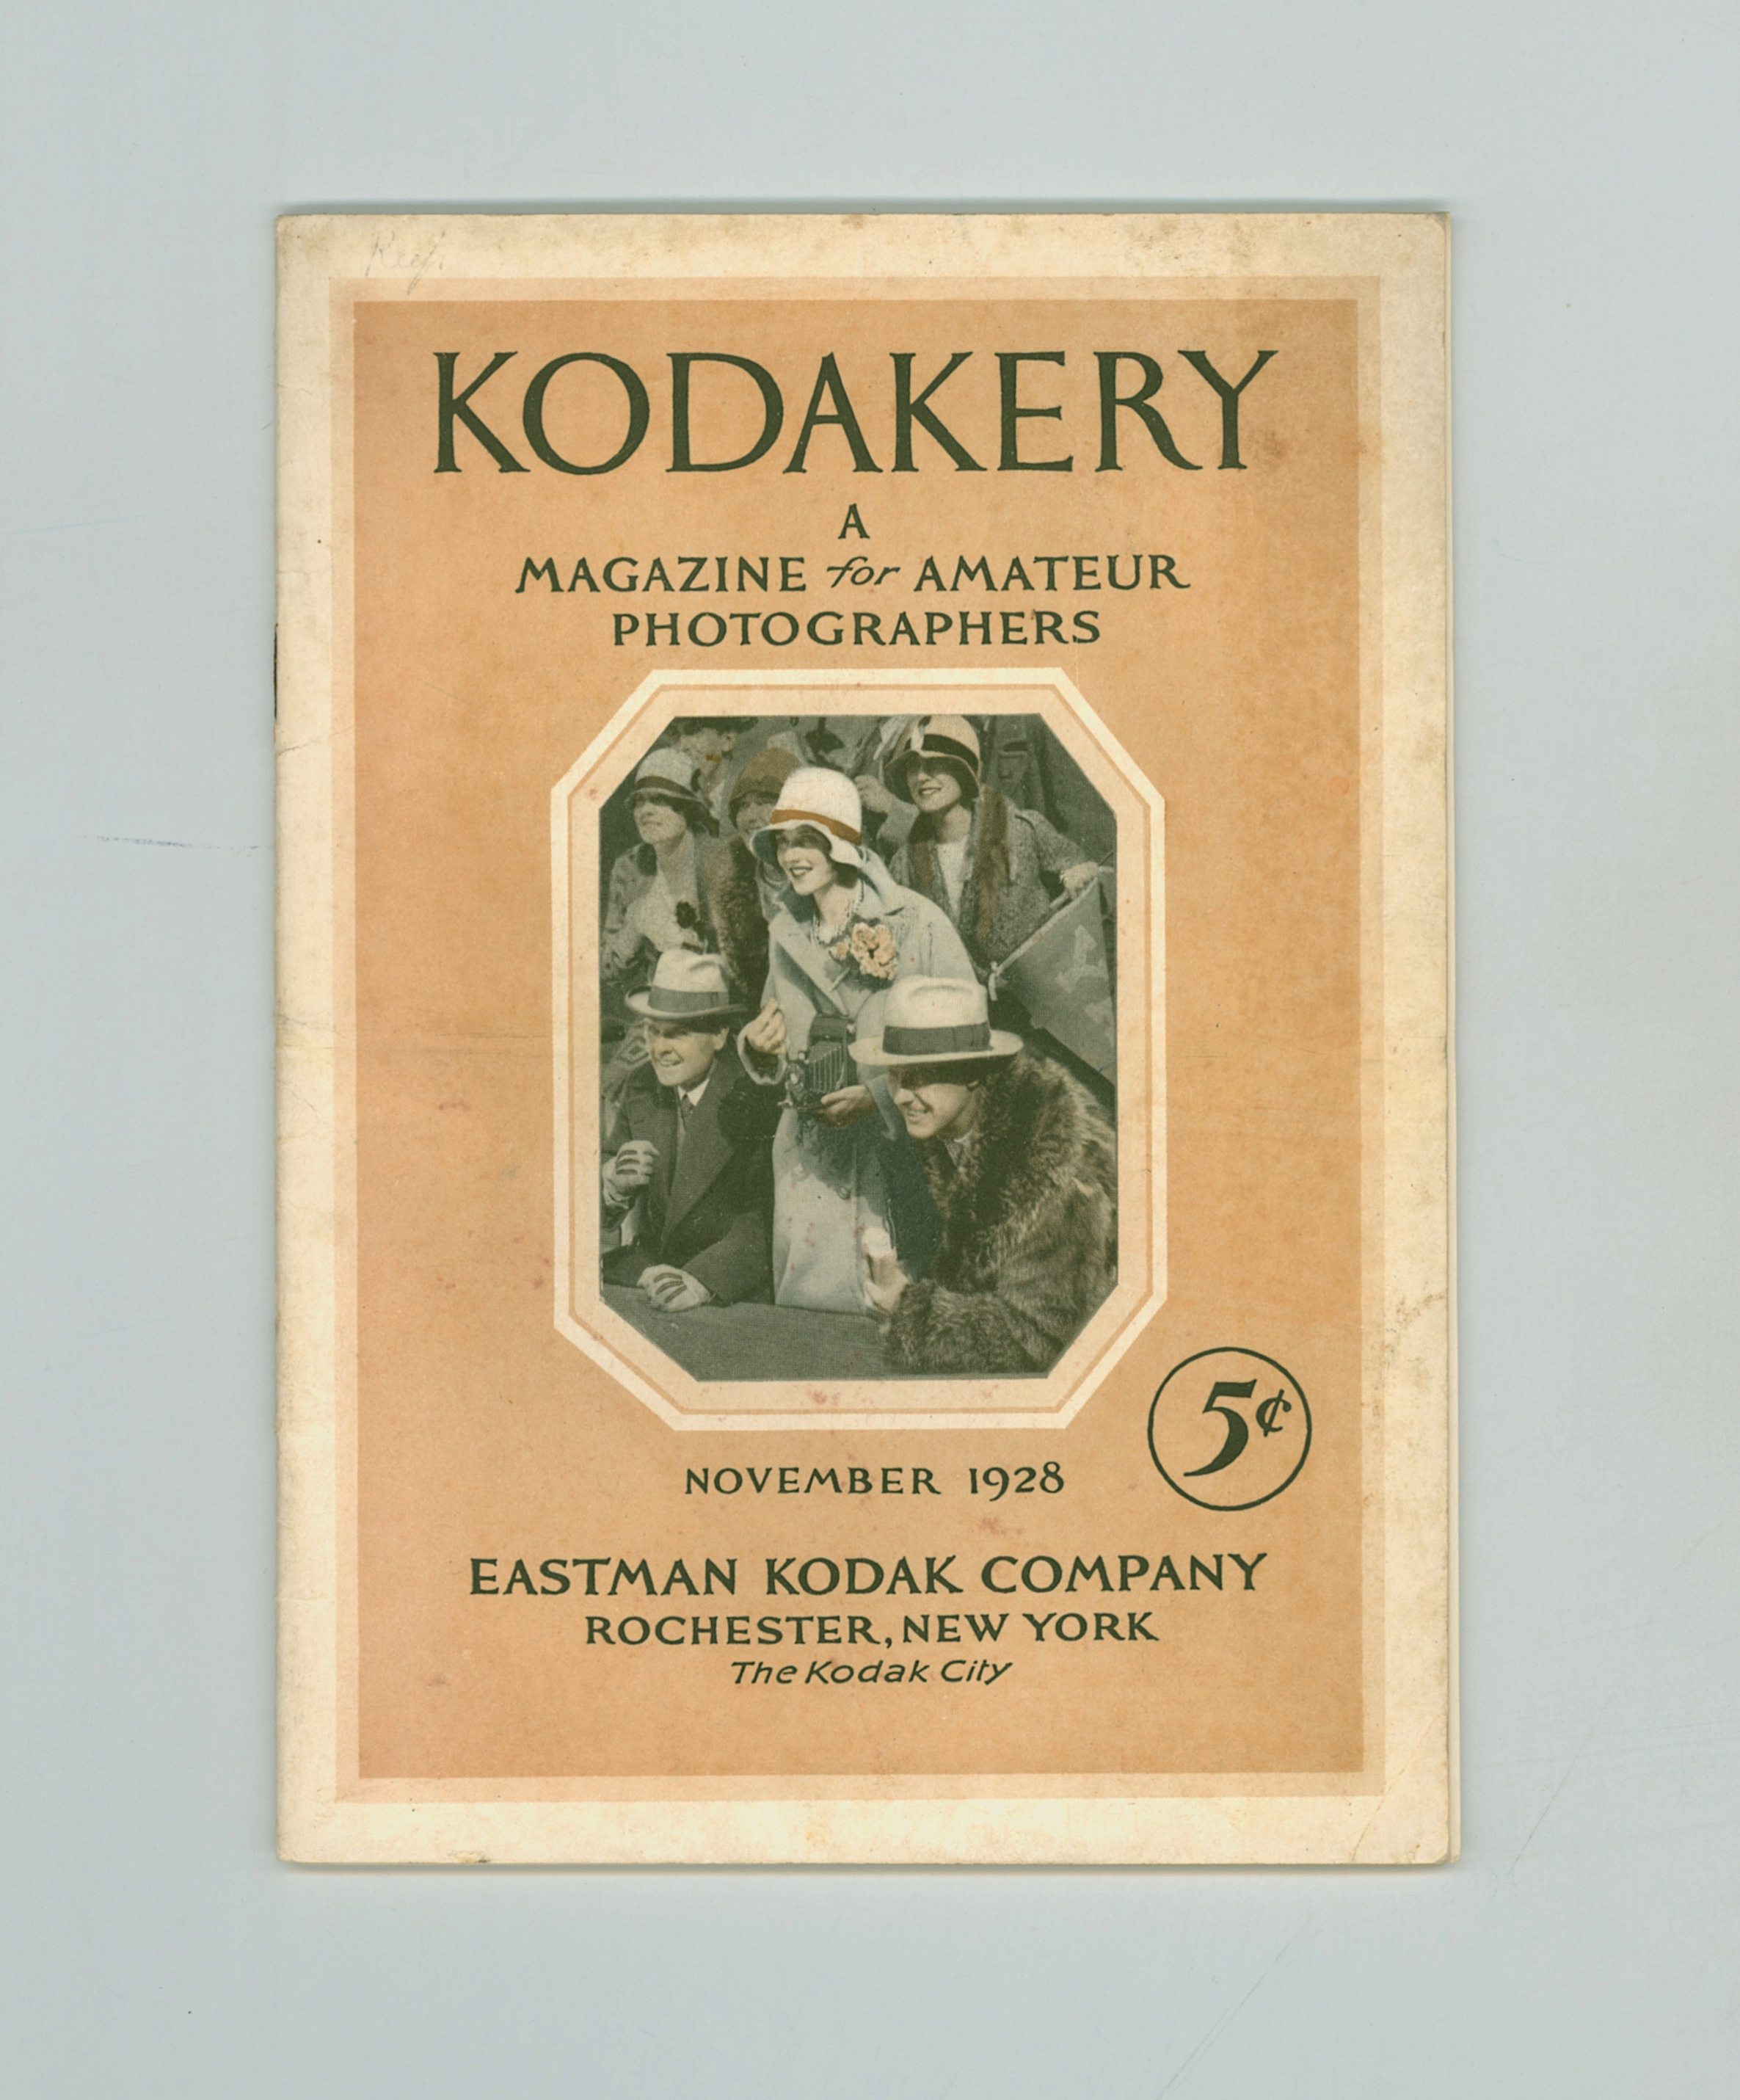 1921 Amateur Photographers Magazine Kodakery Eastman Kodak Company Graflex 